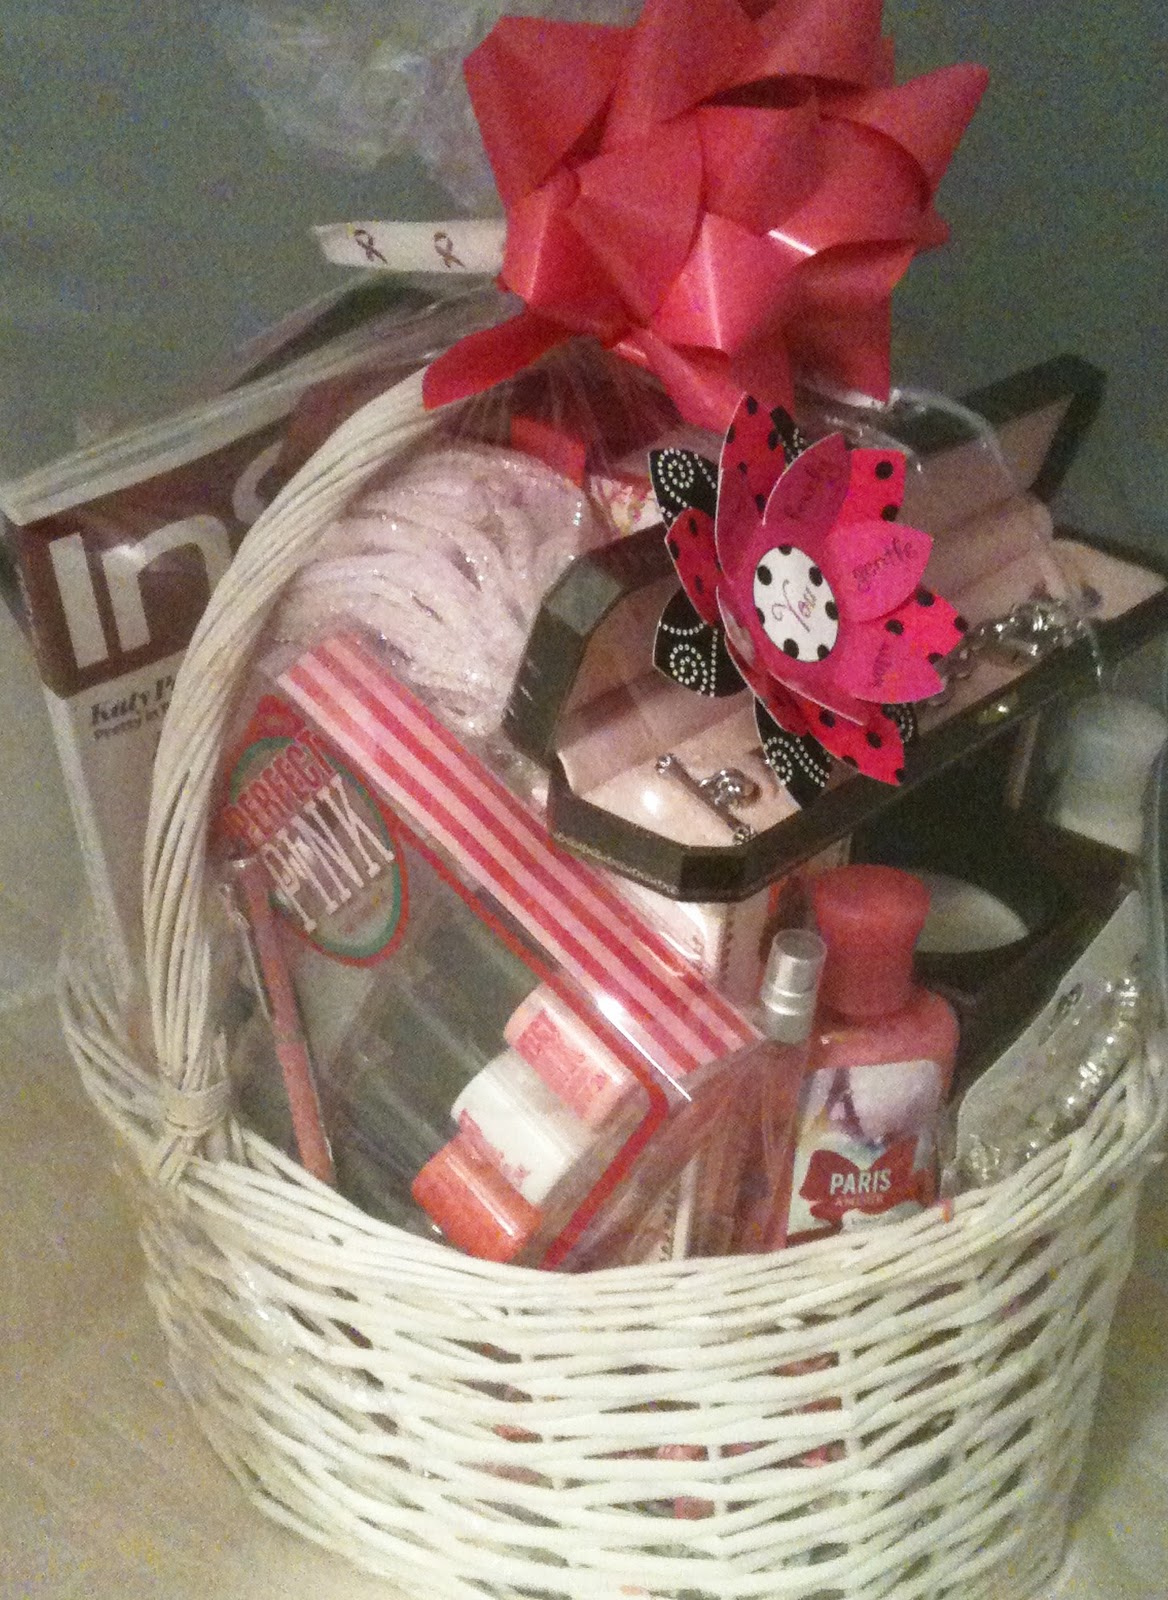 Quality Baskets: Breast Cancer Awareness Gift Basket Fundraiser